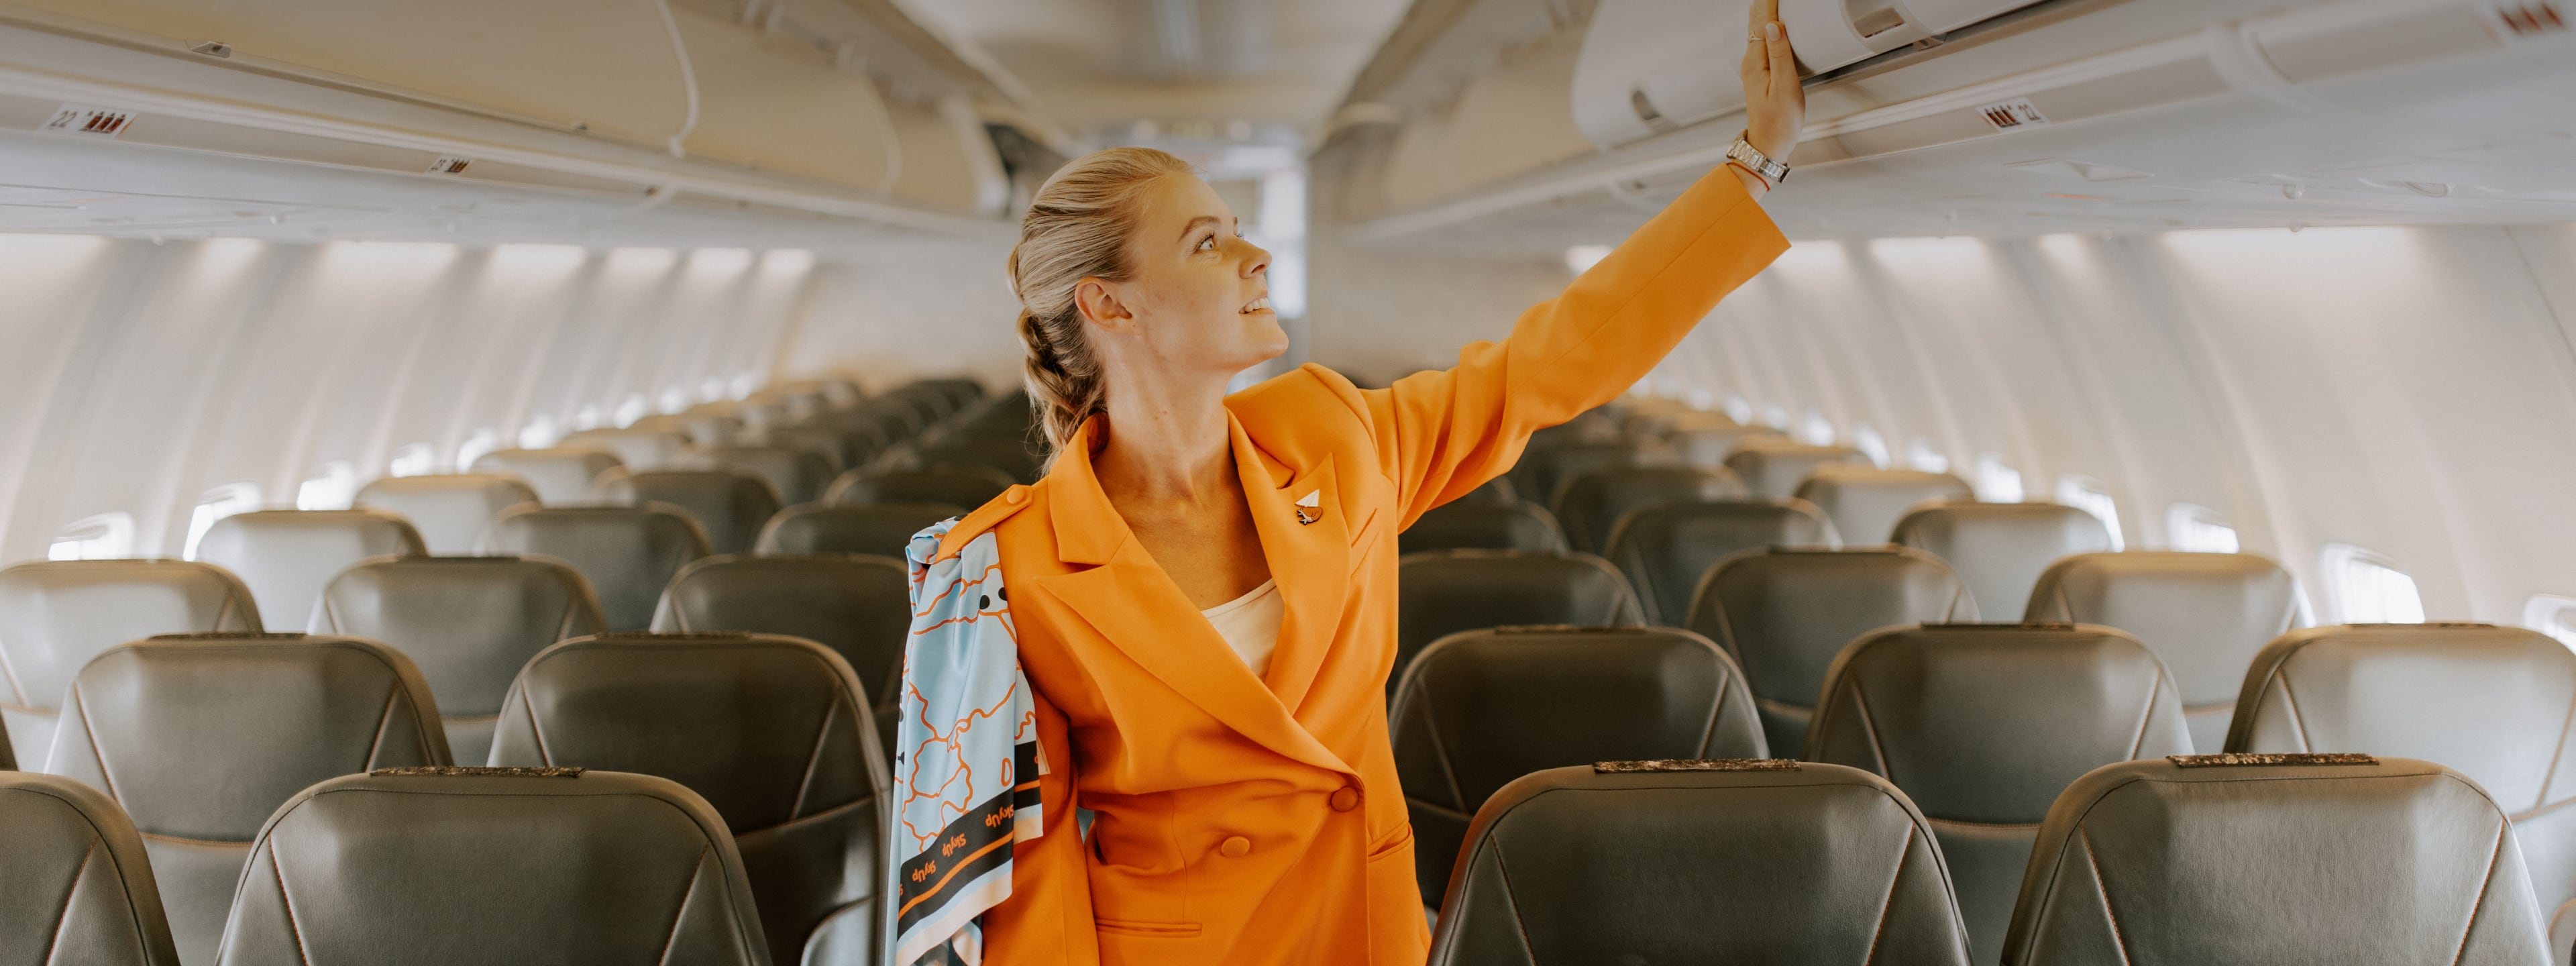 A flight attendant on board an airplane